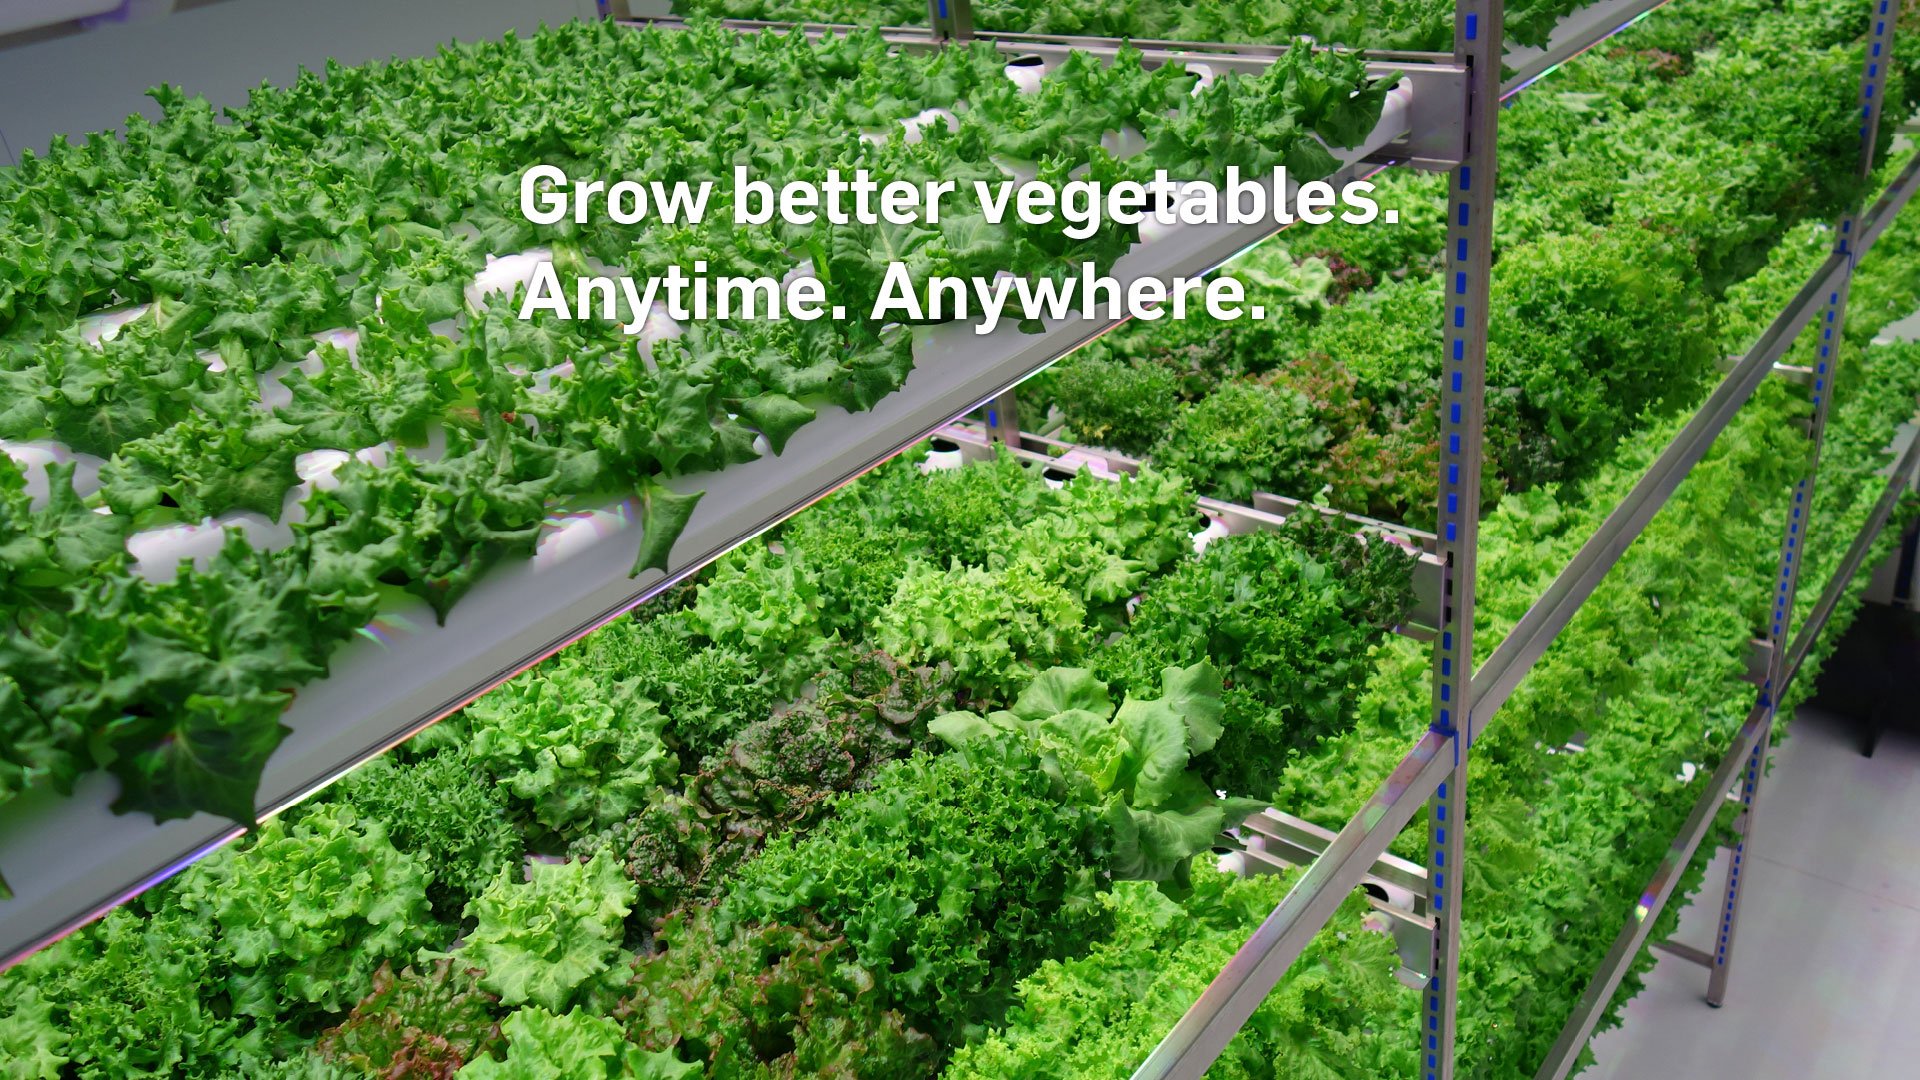 Grow better vegetables anytime anywhere 2